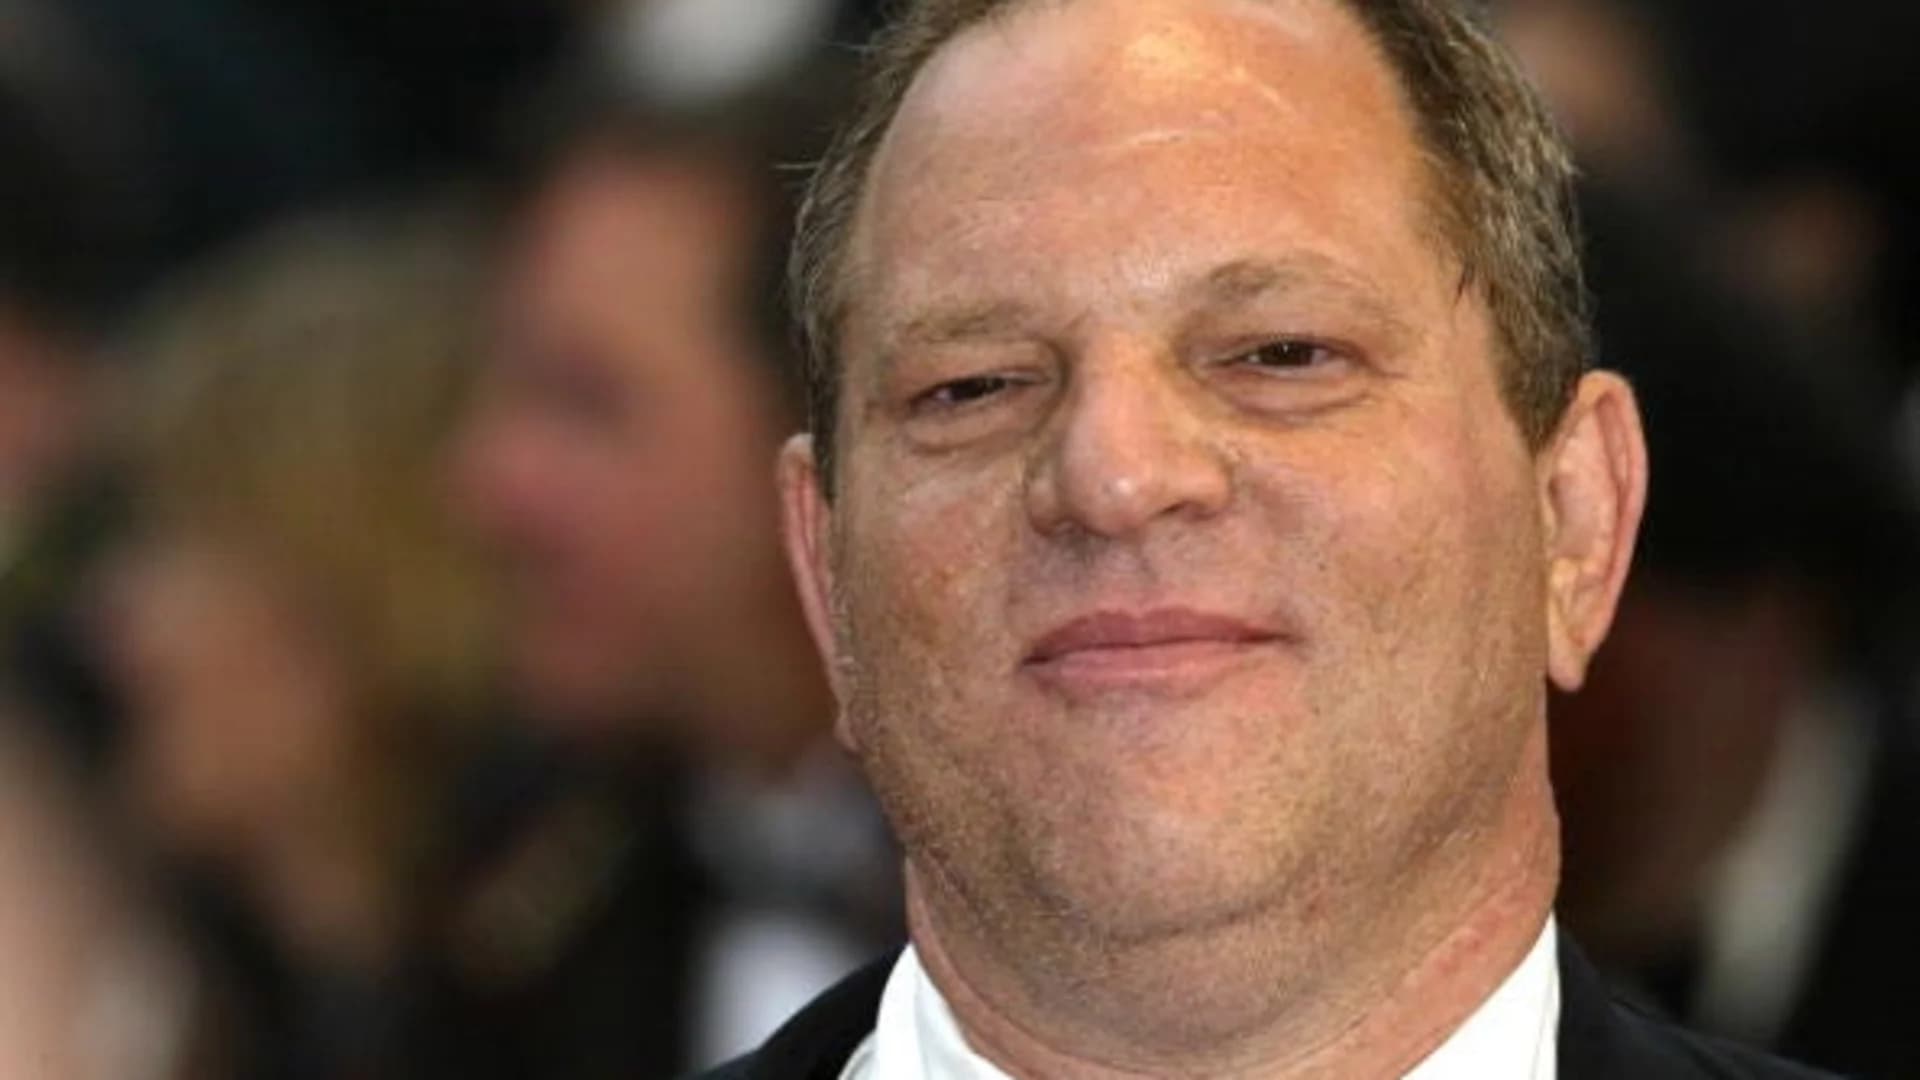 Harvey Weinstein expected to surrender in sex misconduct probe